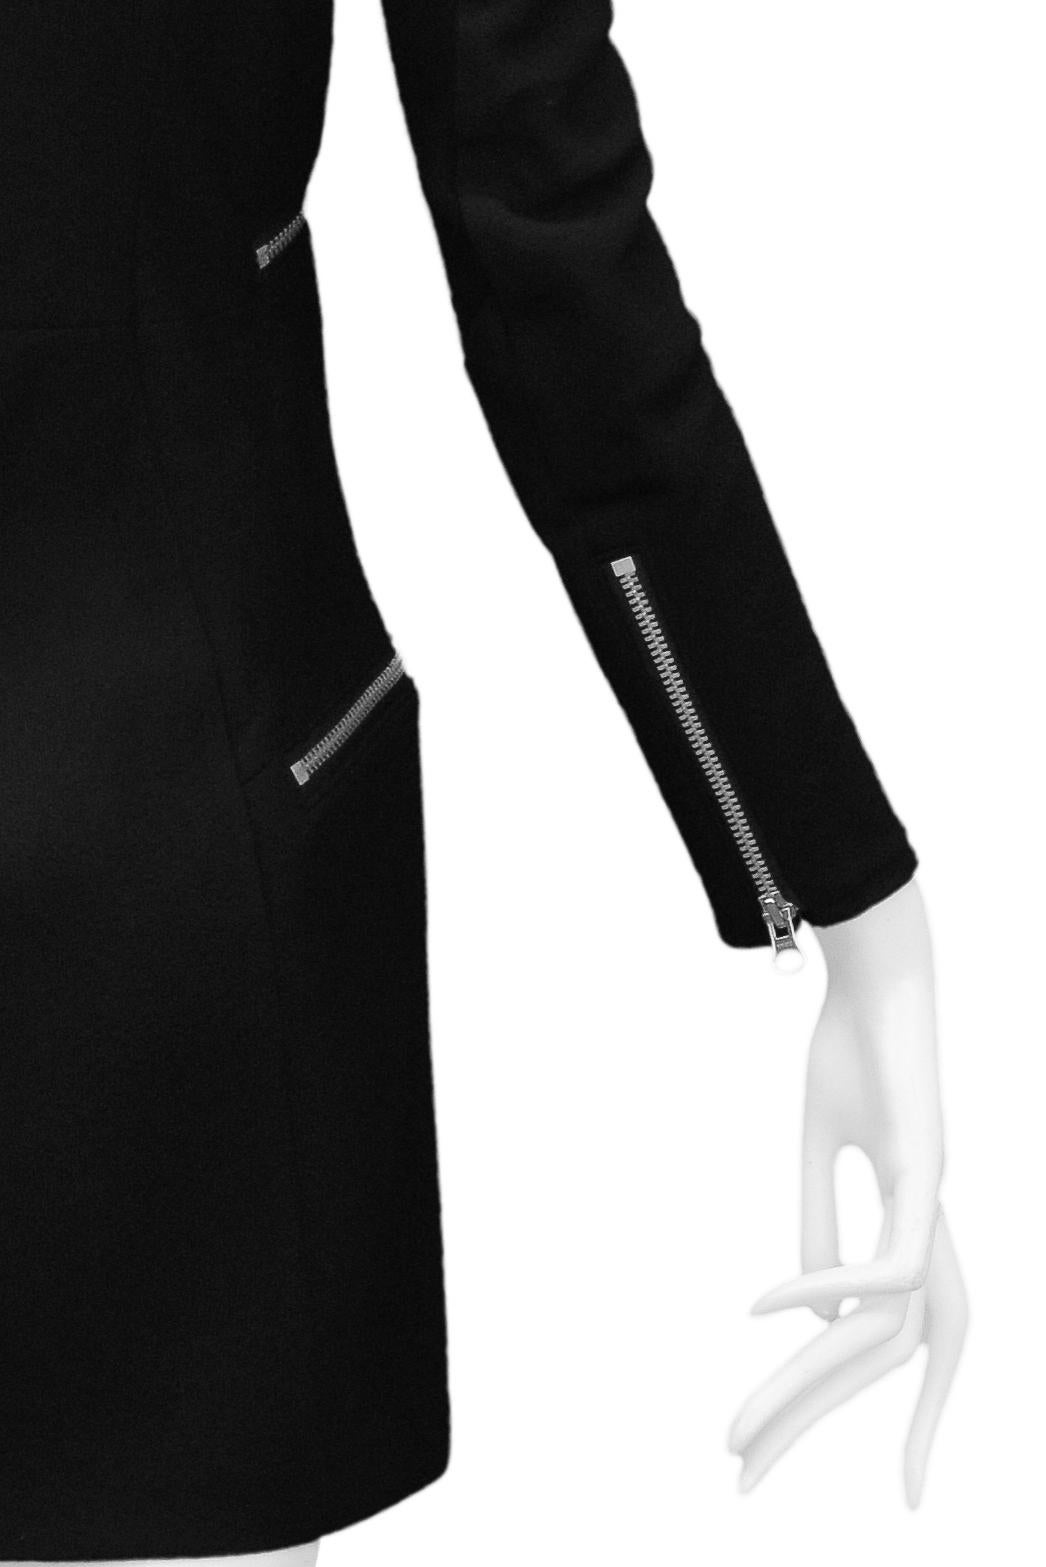 Junya Watanabe Black Wool Zipper Dress 2013 For Sale 3